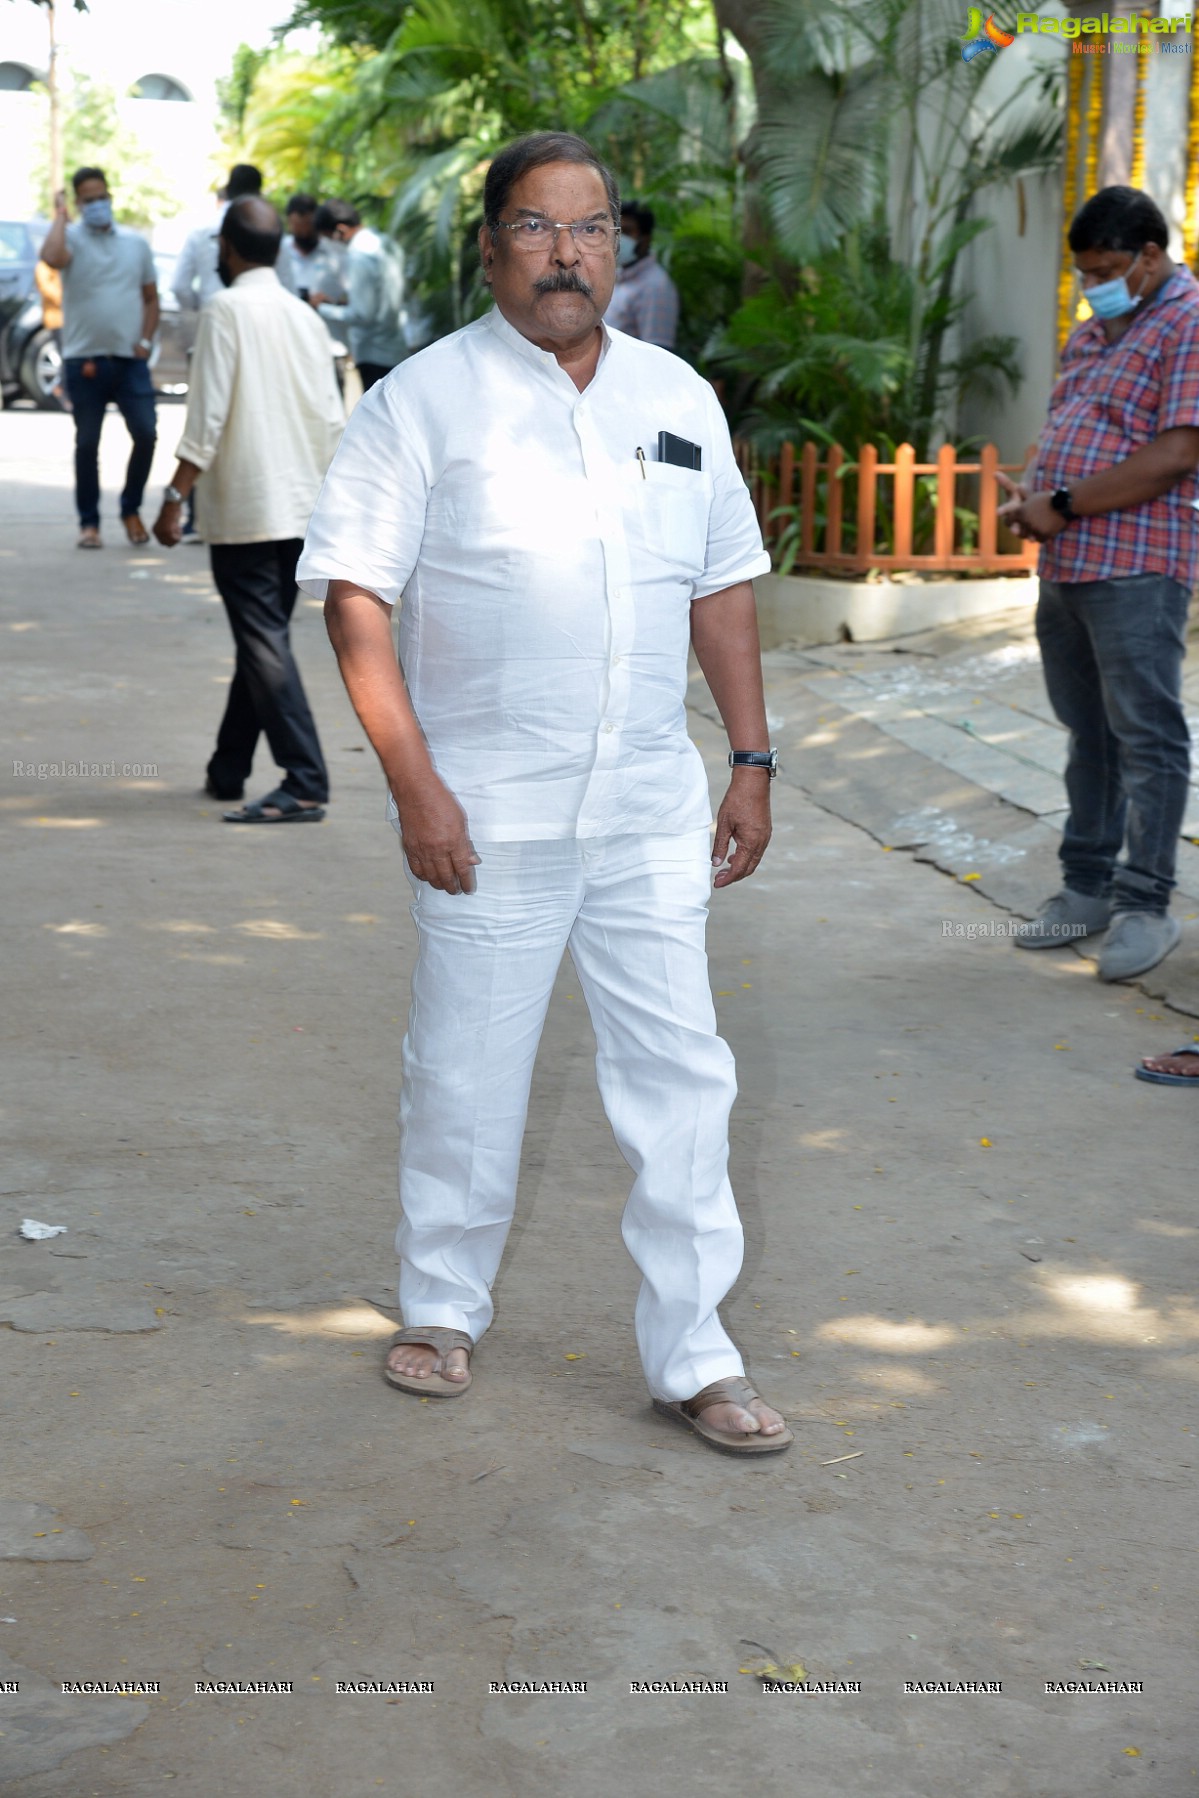 Tollywood Celebs Pay Their Last Respects to Producer Narayan Das Narang